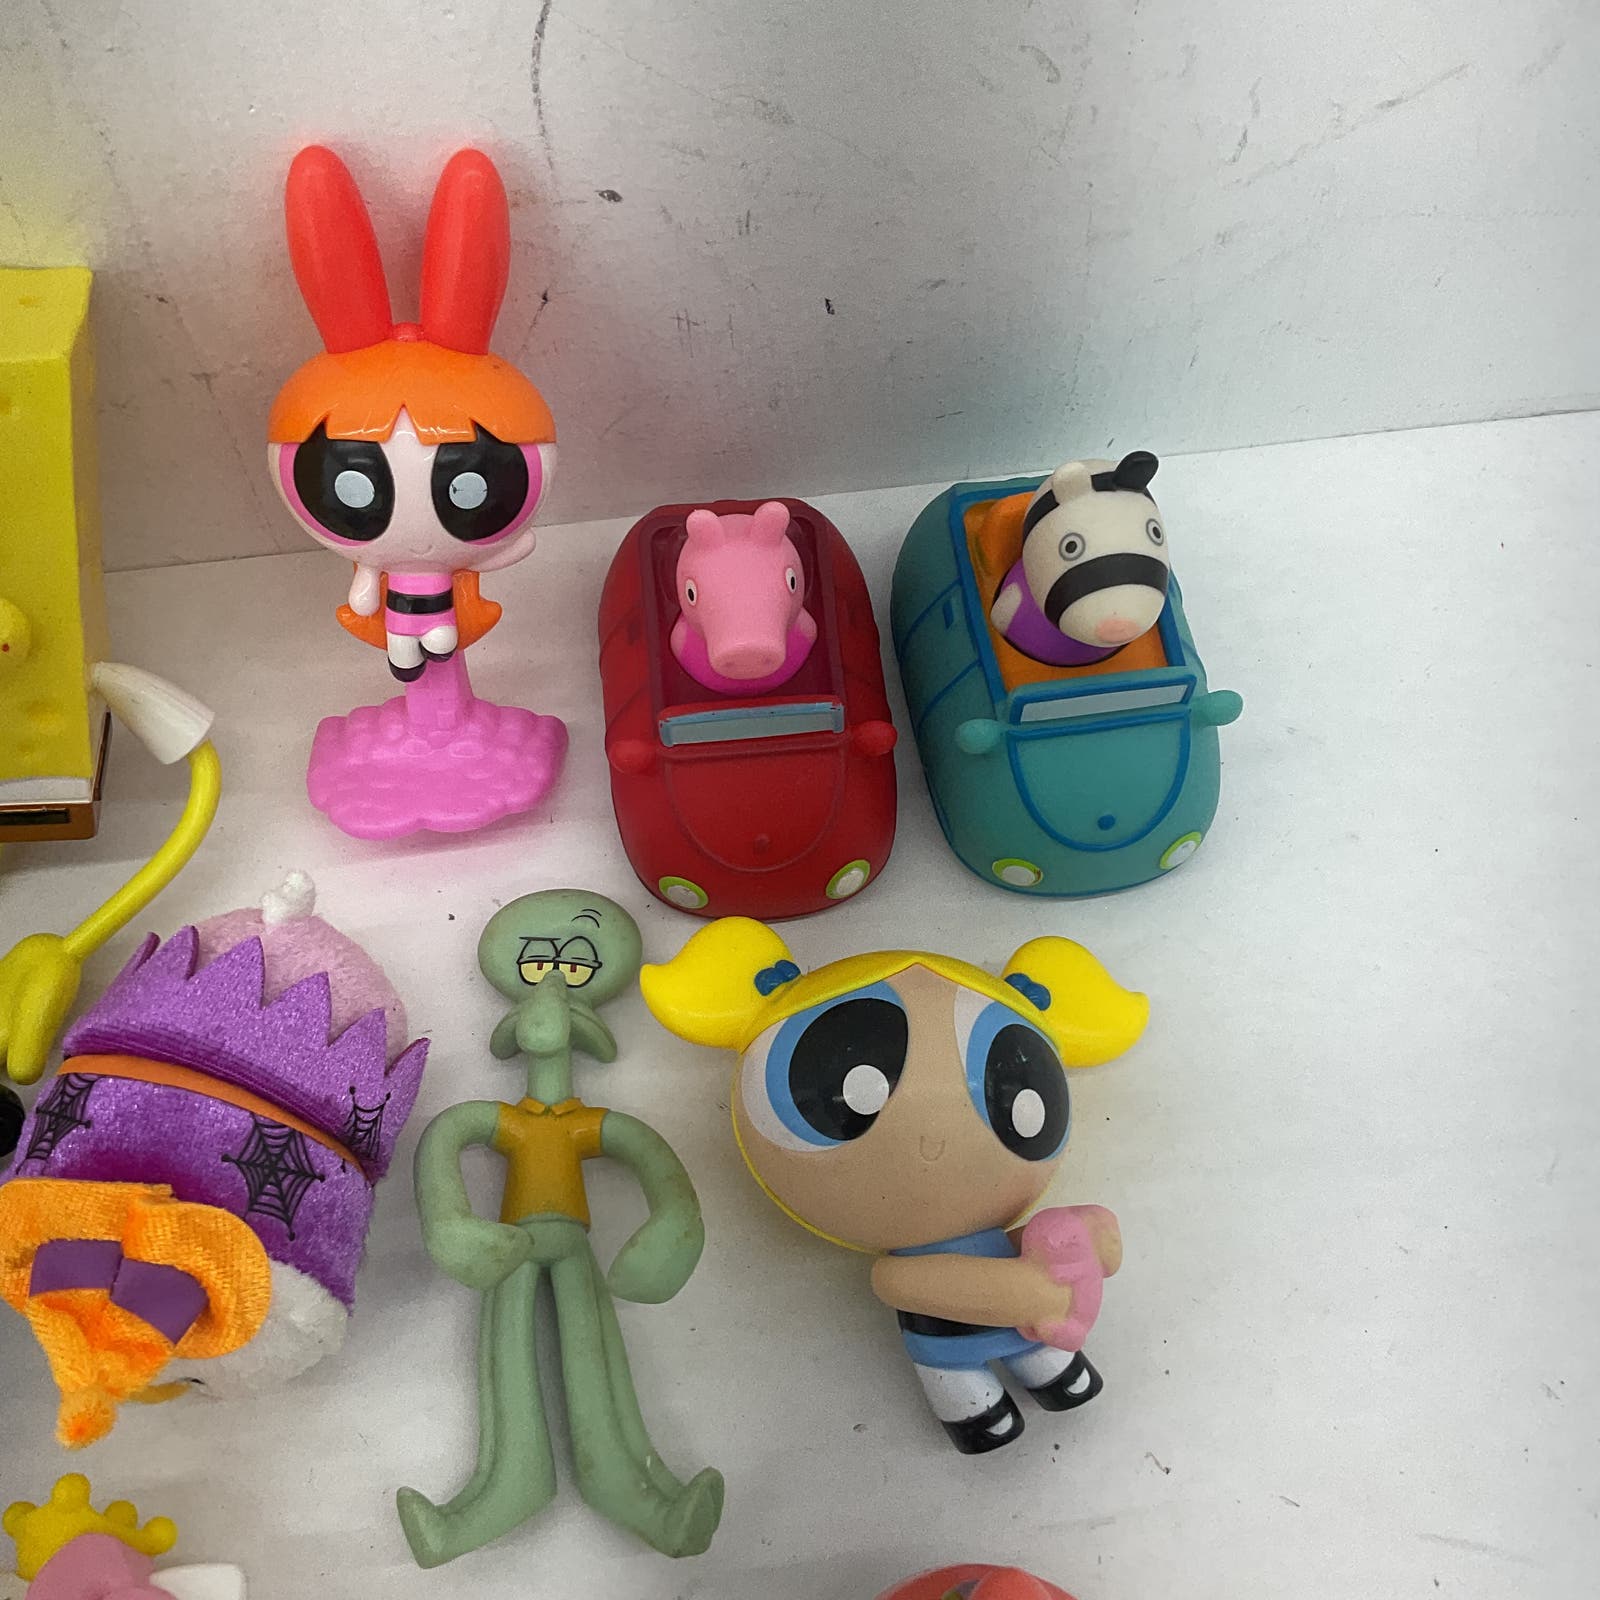 Assorted Multicolor Toy Figure Lot Spongebob Powerpuff Girls Hello Kitty - Warehouse Toys